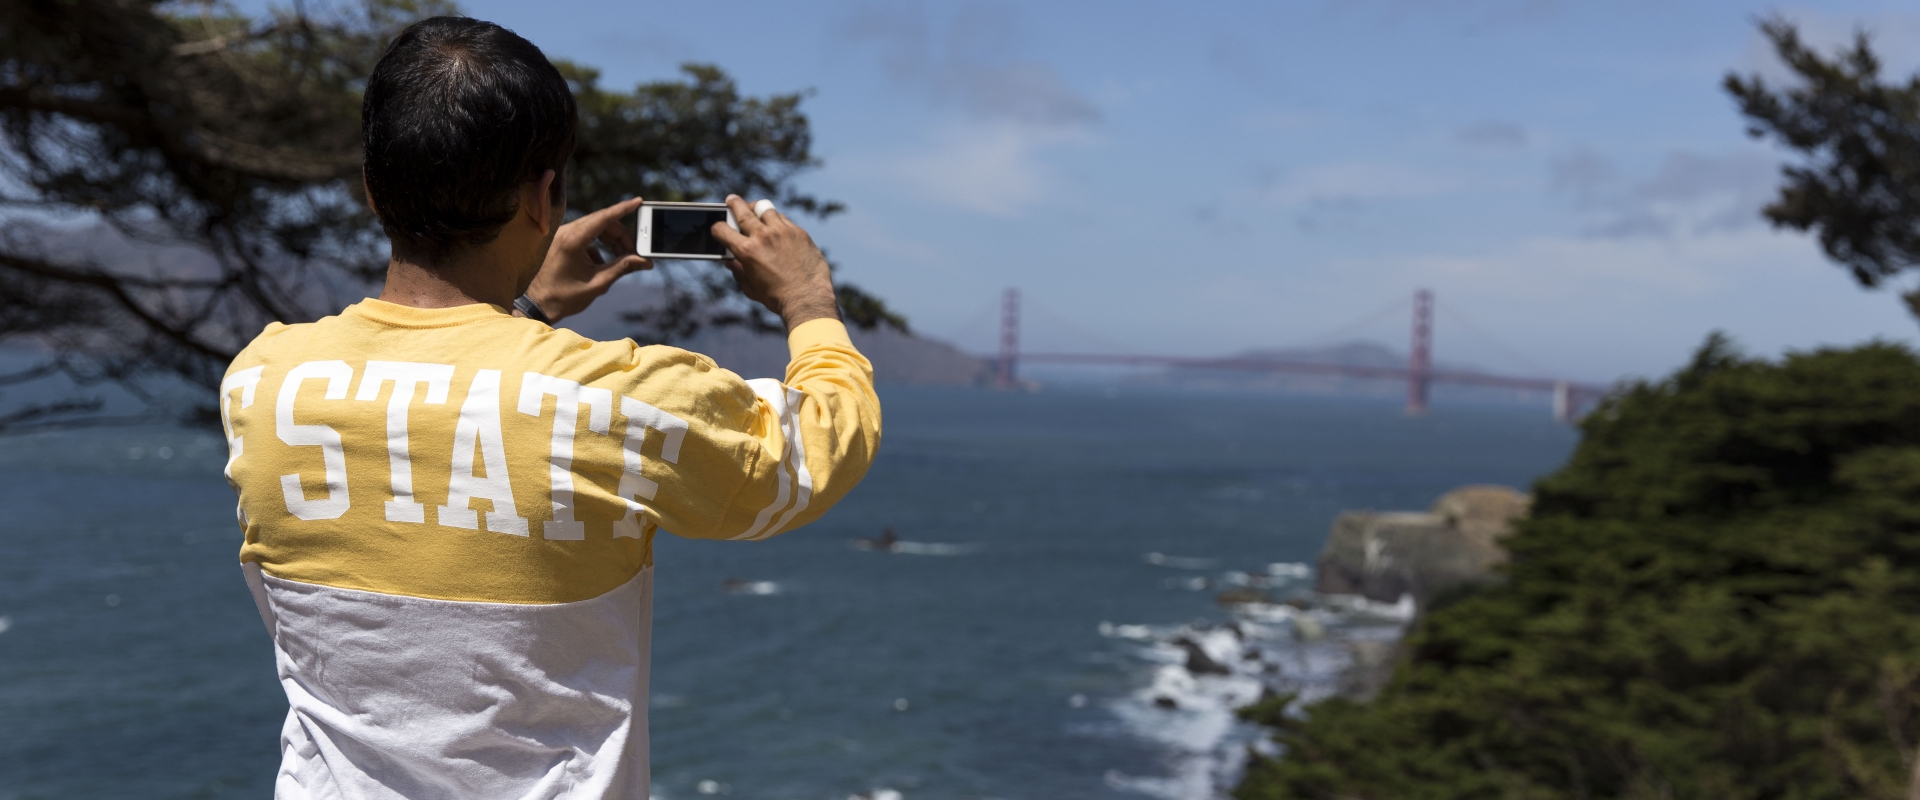 Student taking photo of the Golden Gate Bridge